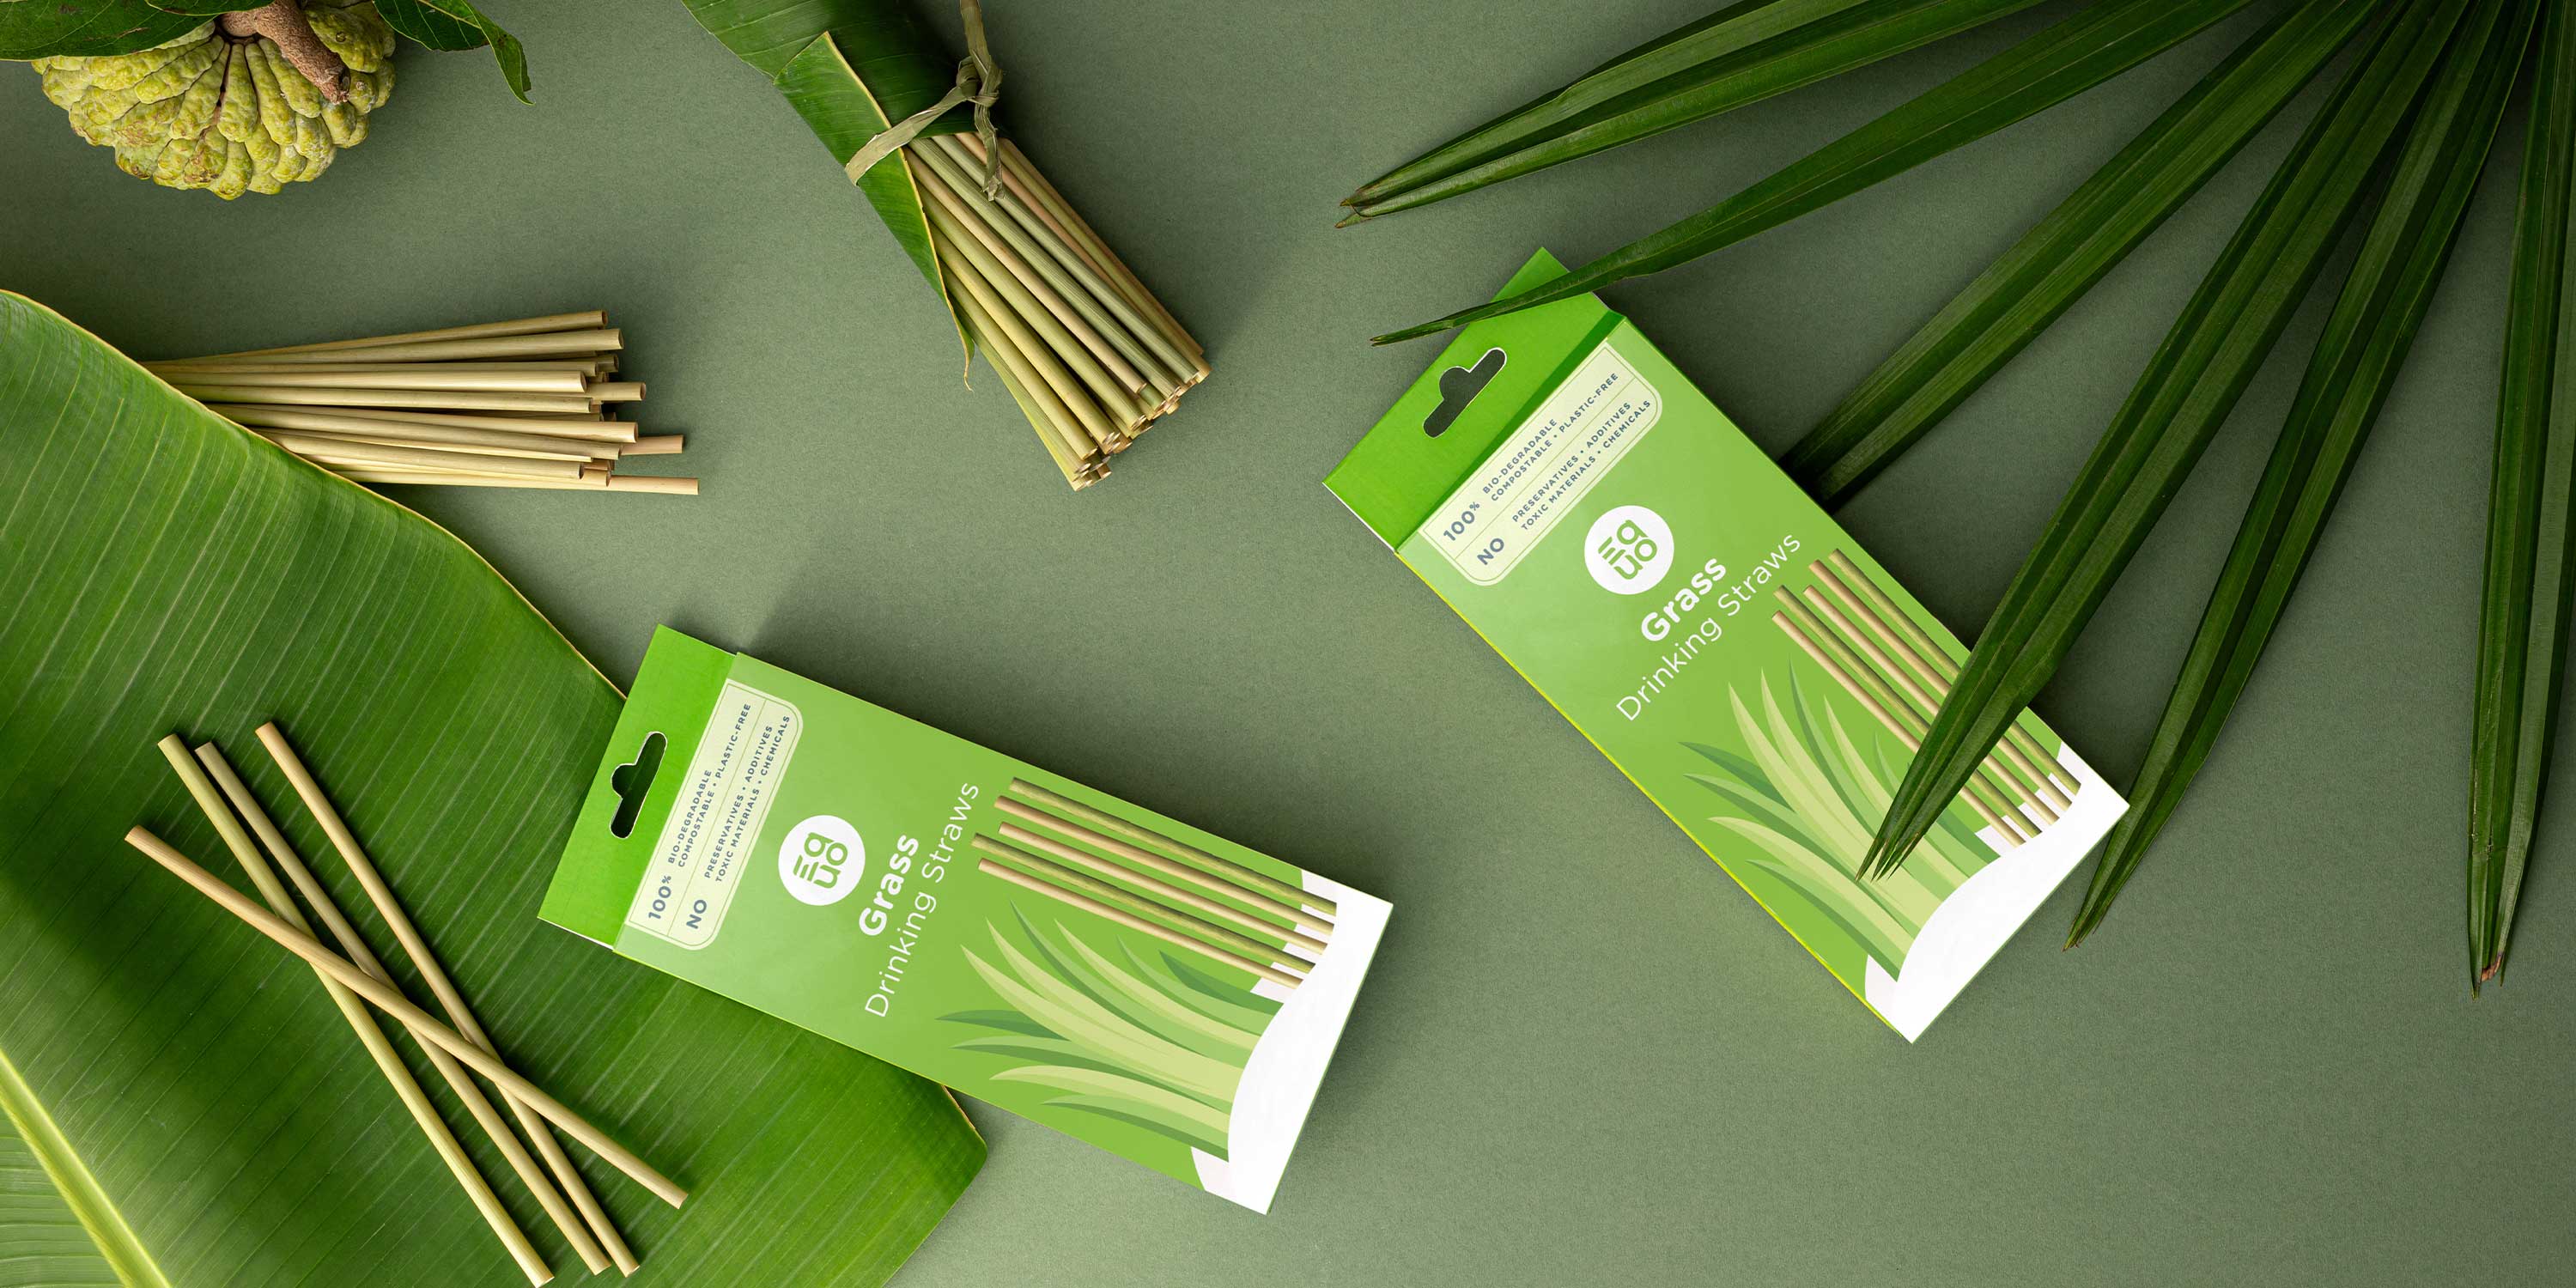 EQUO Grass Straws